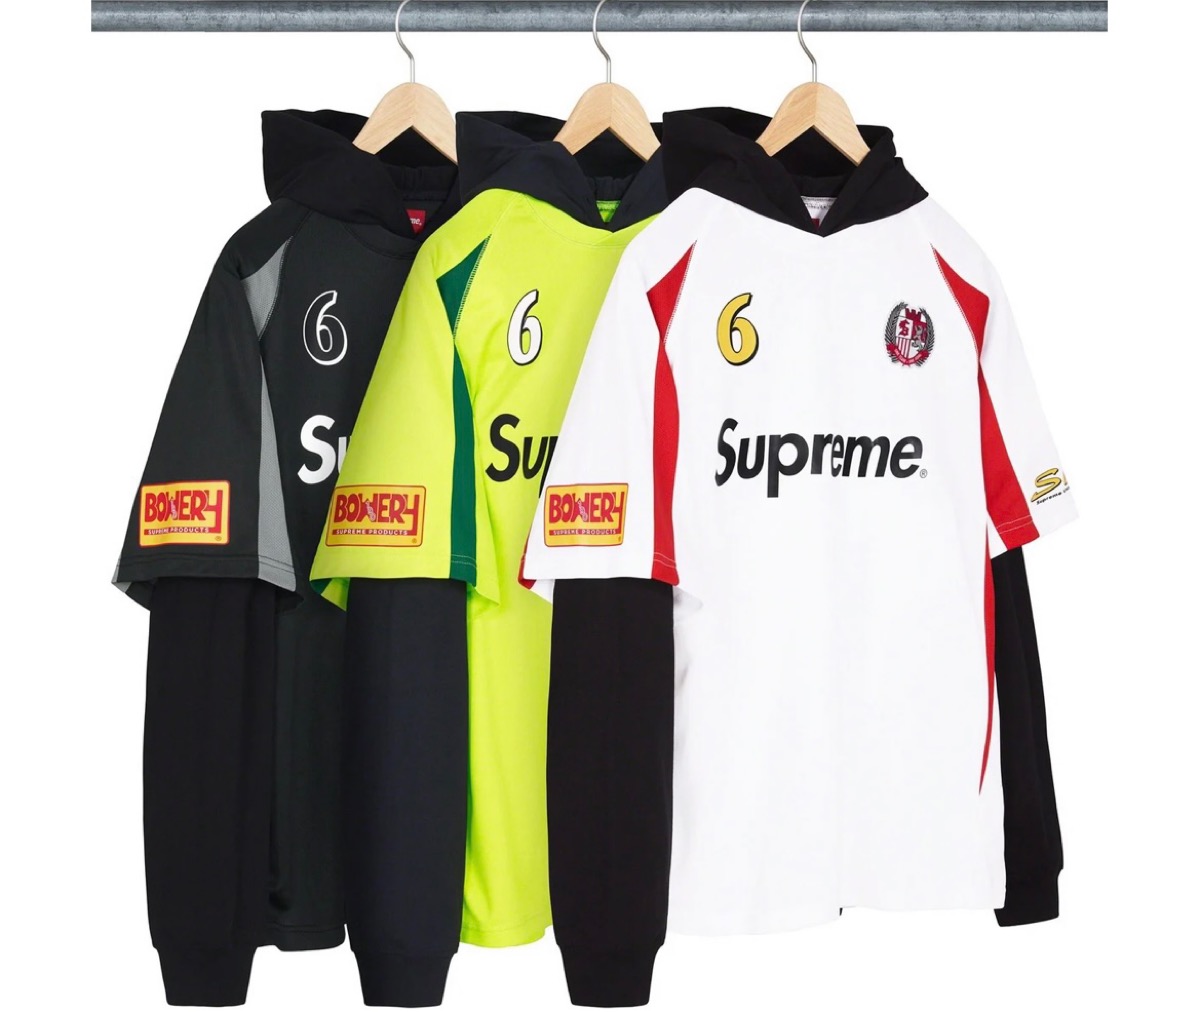 Supreme Hooded Soccer Jersey Black Lサイズ